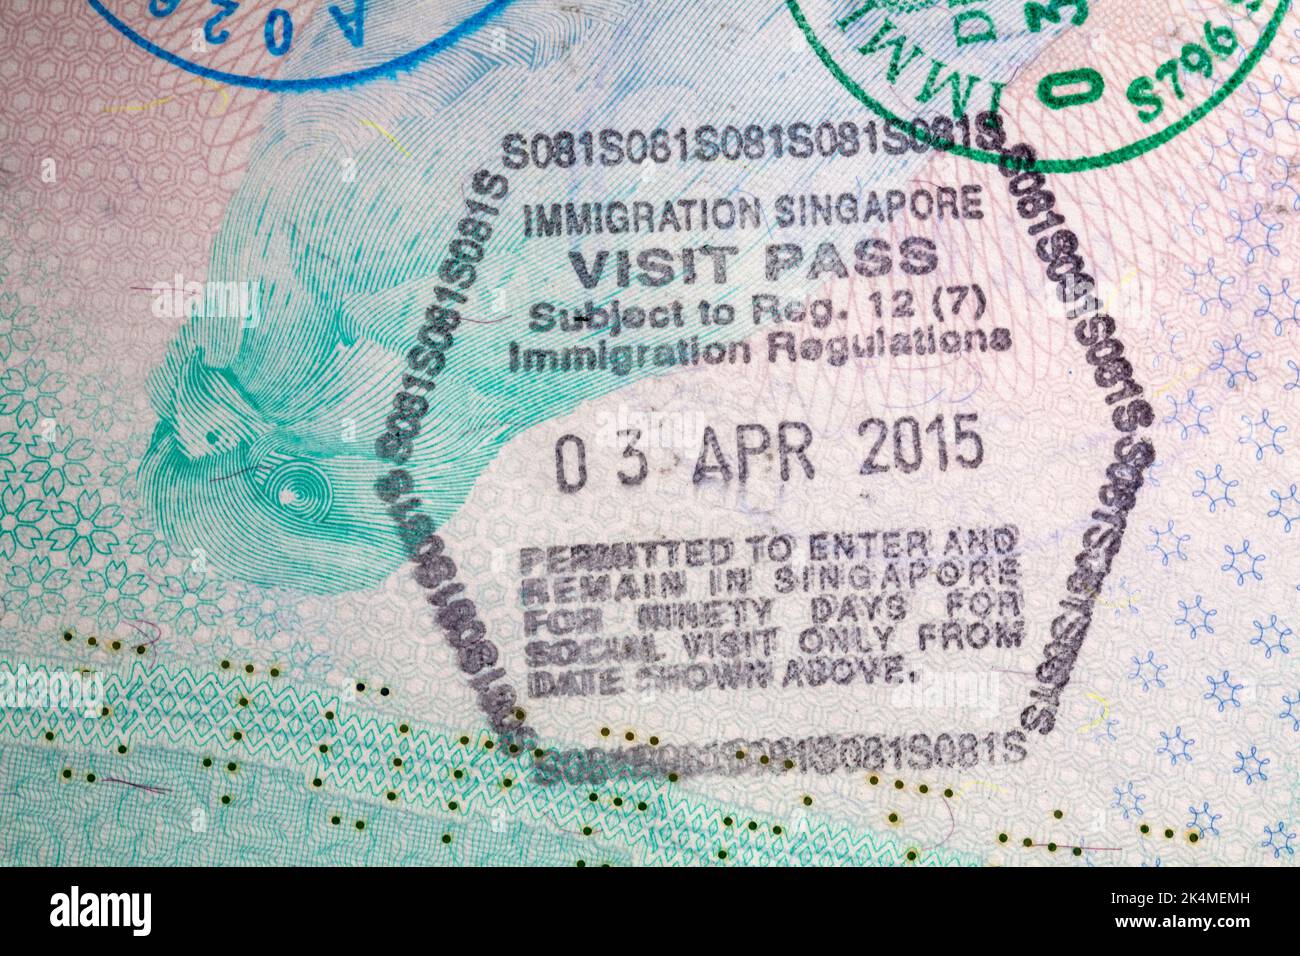 Immigration Singapore Visit Pass 03 Apr 2015 stamp in British passport Stock Photo